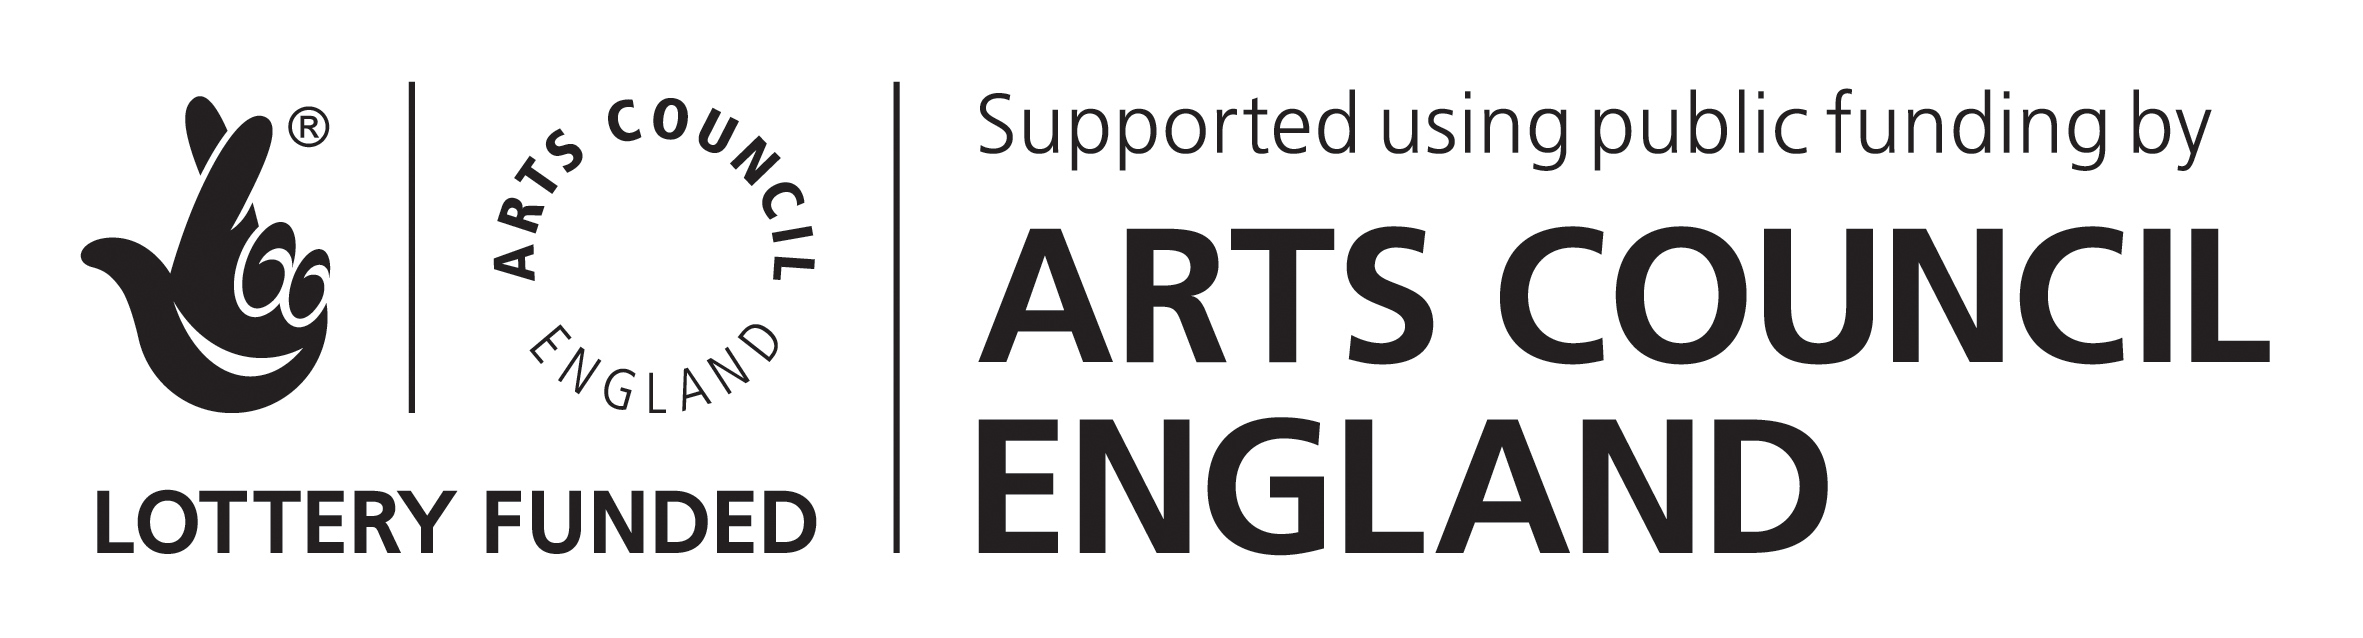 Link to Arts Council England website